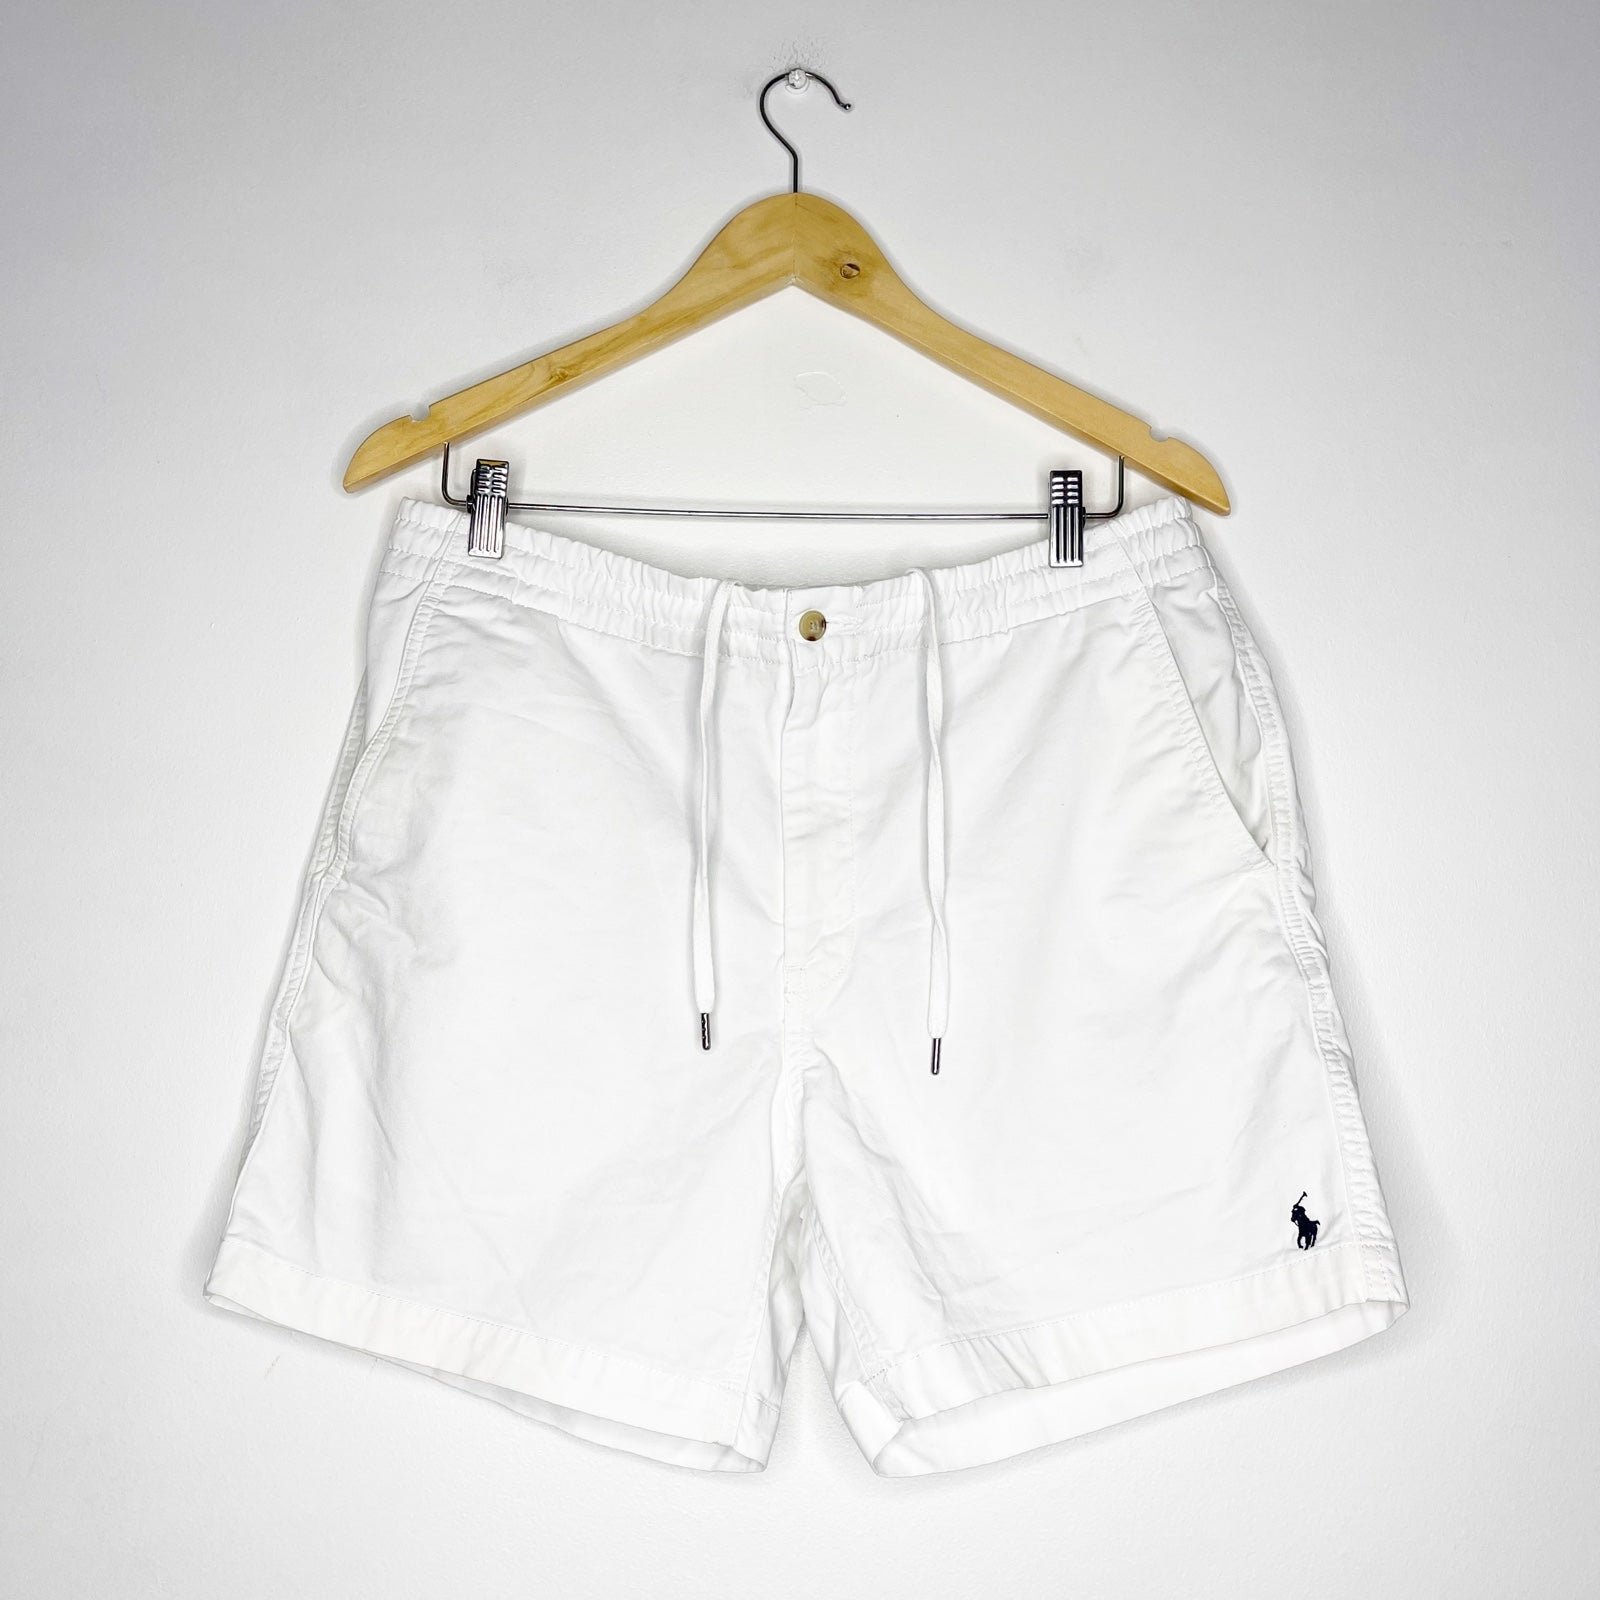 Polo Ralph Lauren White 6 inch Pepster Shorts Size Medium 2Jkermmo5